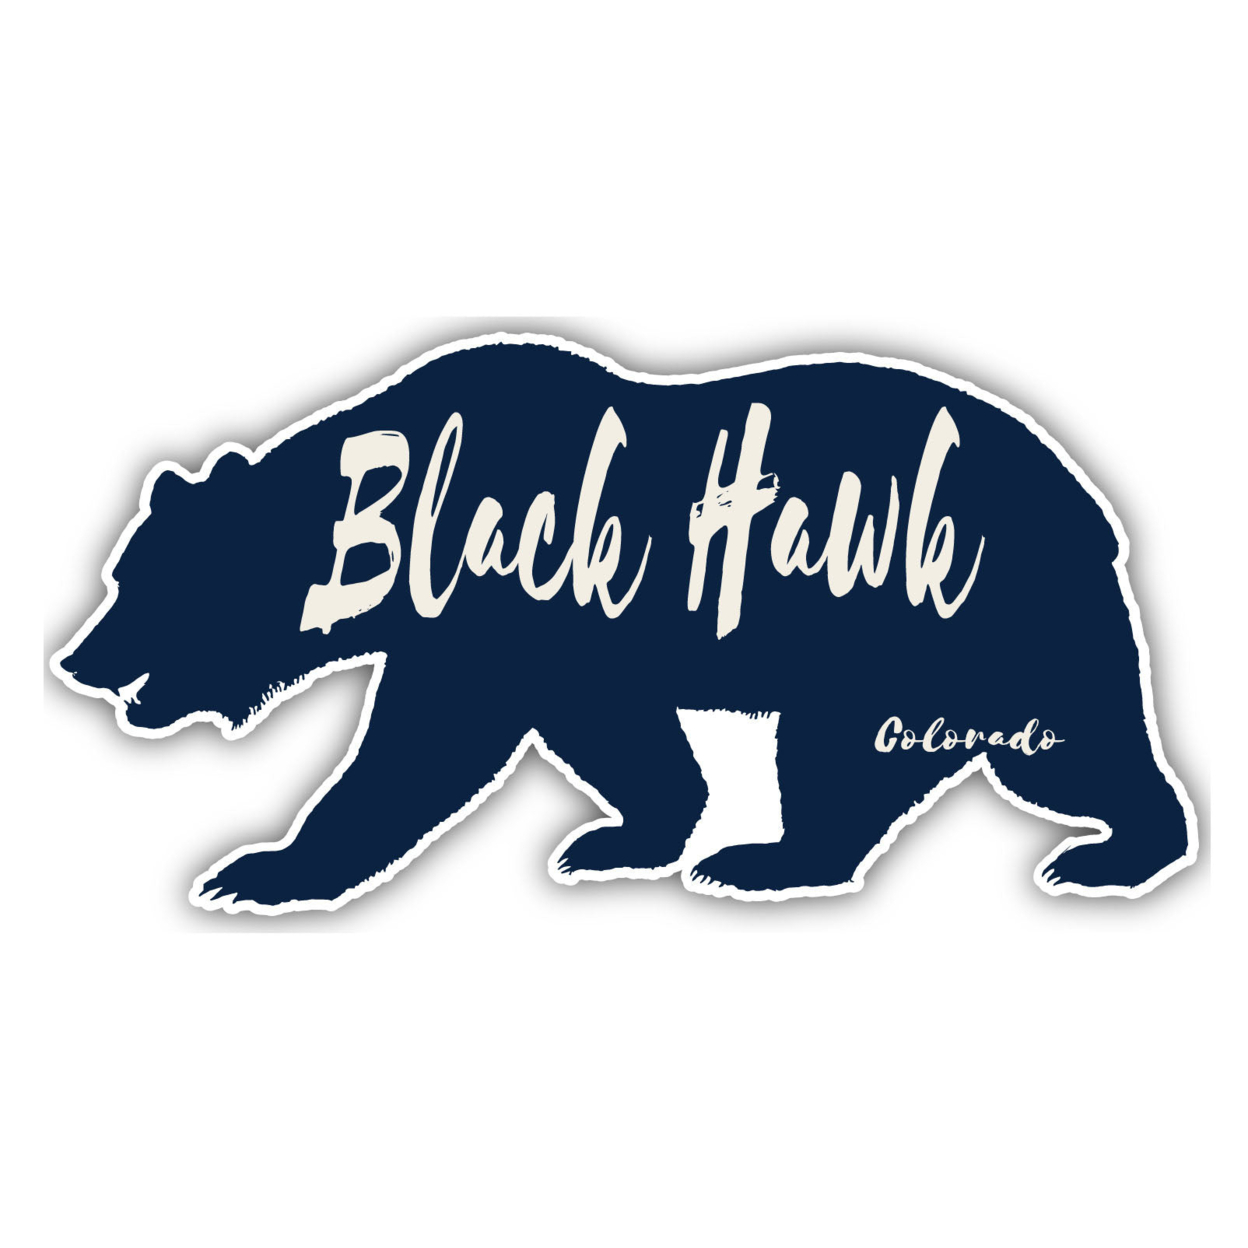 Black Hawk Colorado Souvenir Decorative Stickers (Choose Theme And Size) - Single Unit, 6-Inch, Adventures Awaits